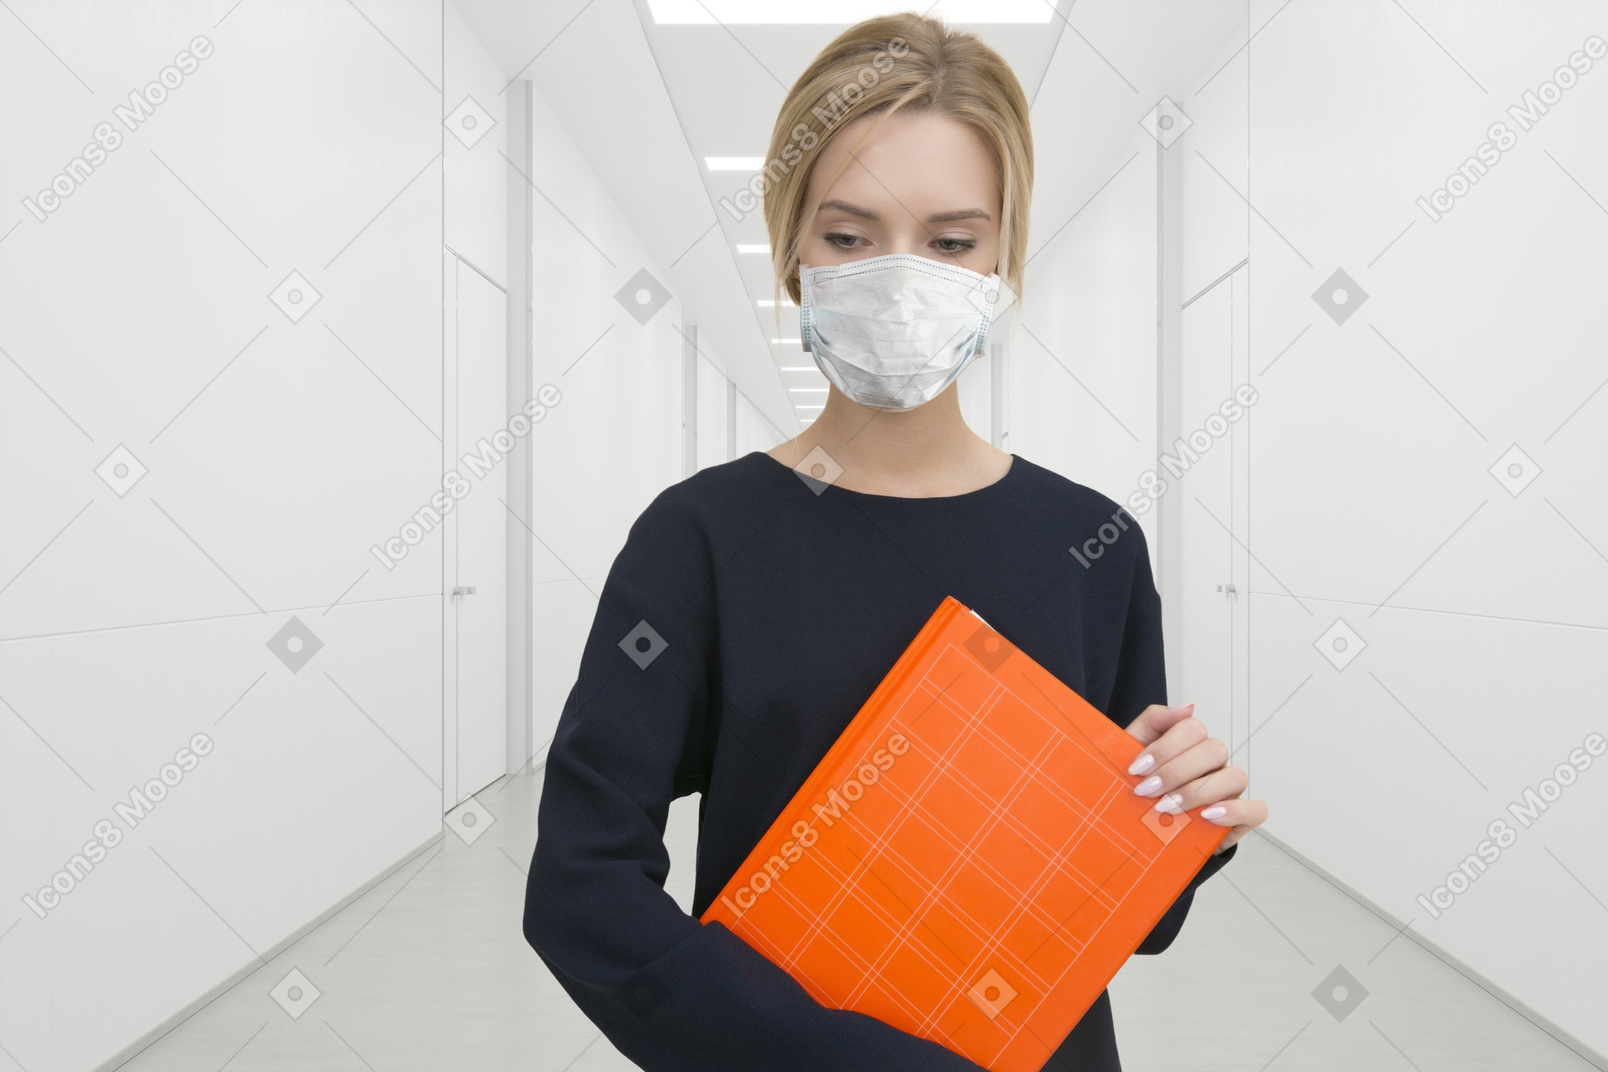 A woman wearing a face mask holding an orange folder